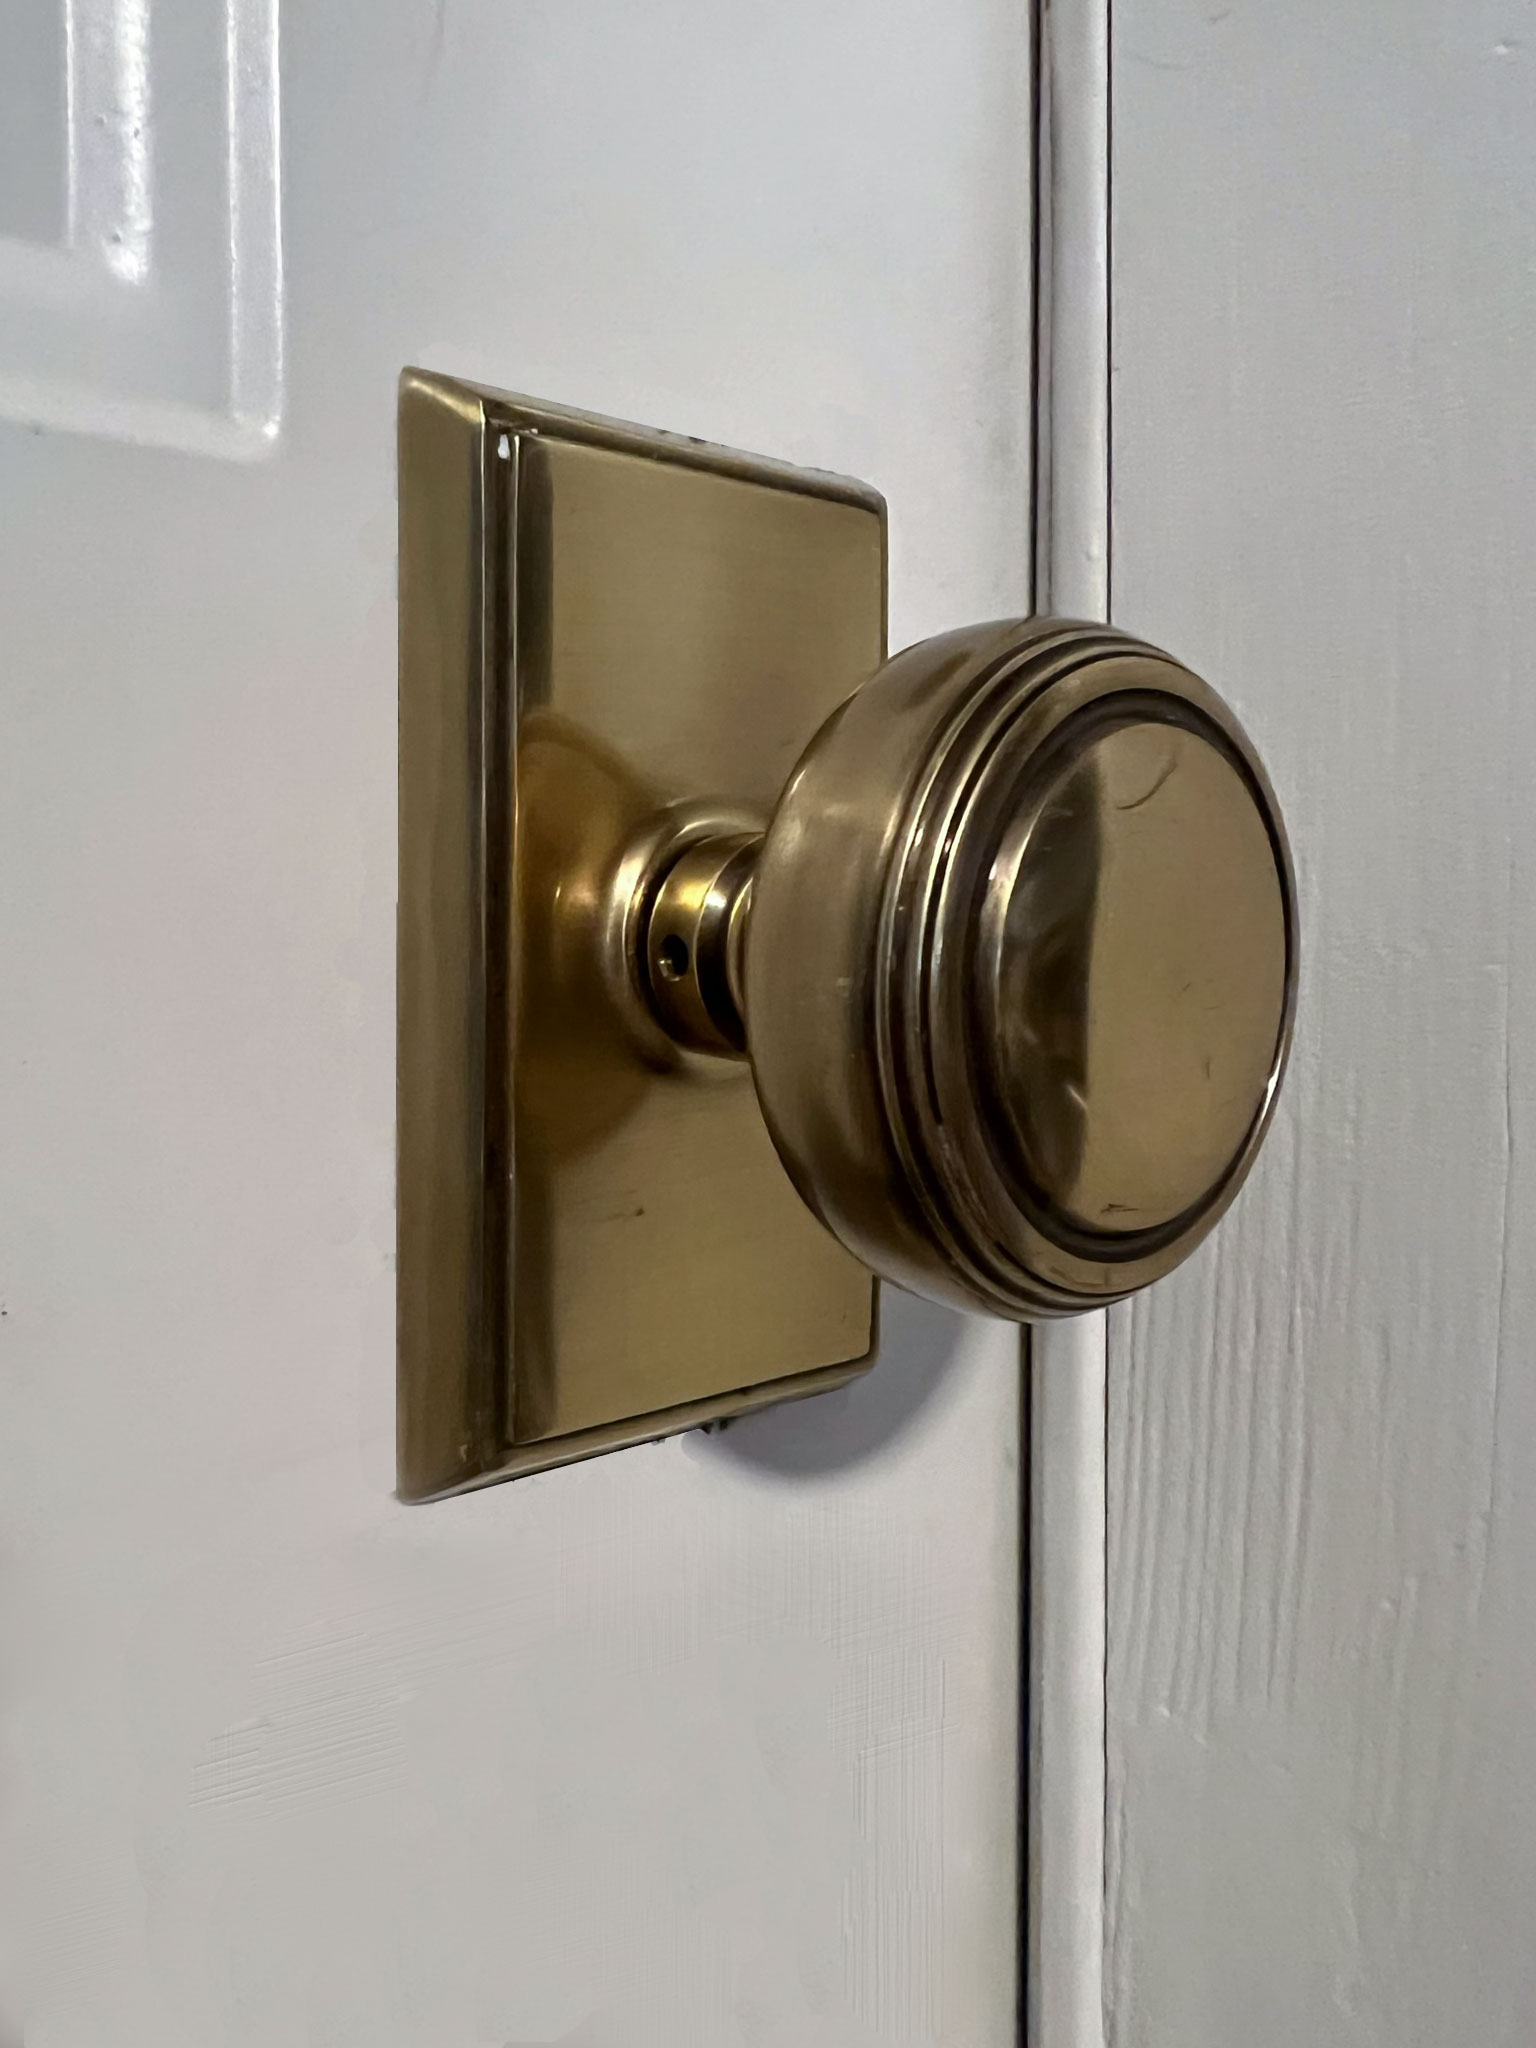 Brass emtek door knob in antique brass with a rectangular rosette